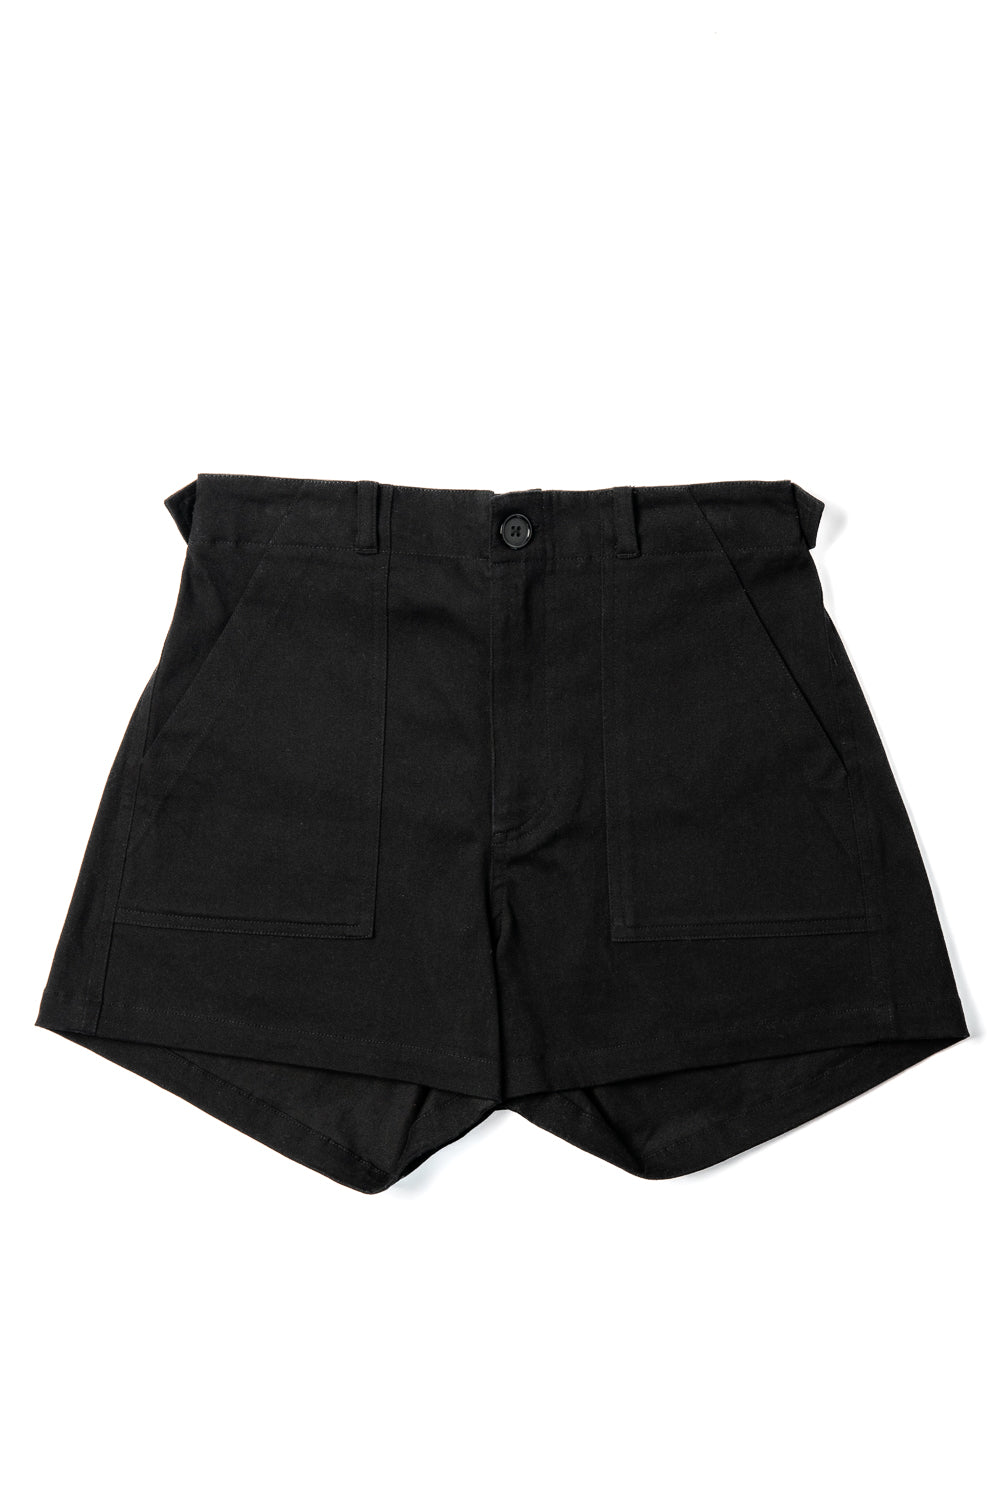 womens adjustable black cargo hiking outdoor shorts #color_black